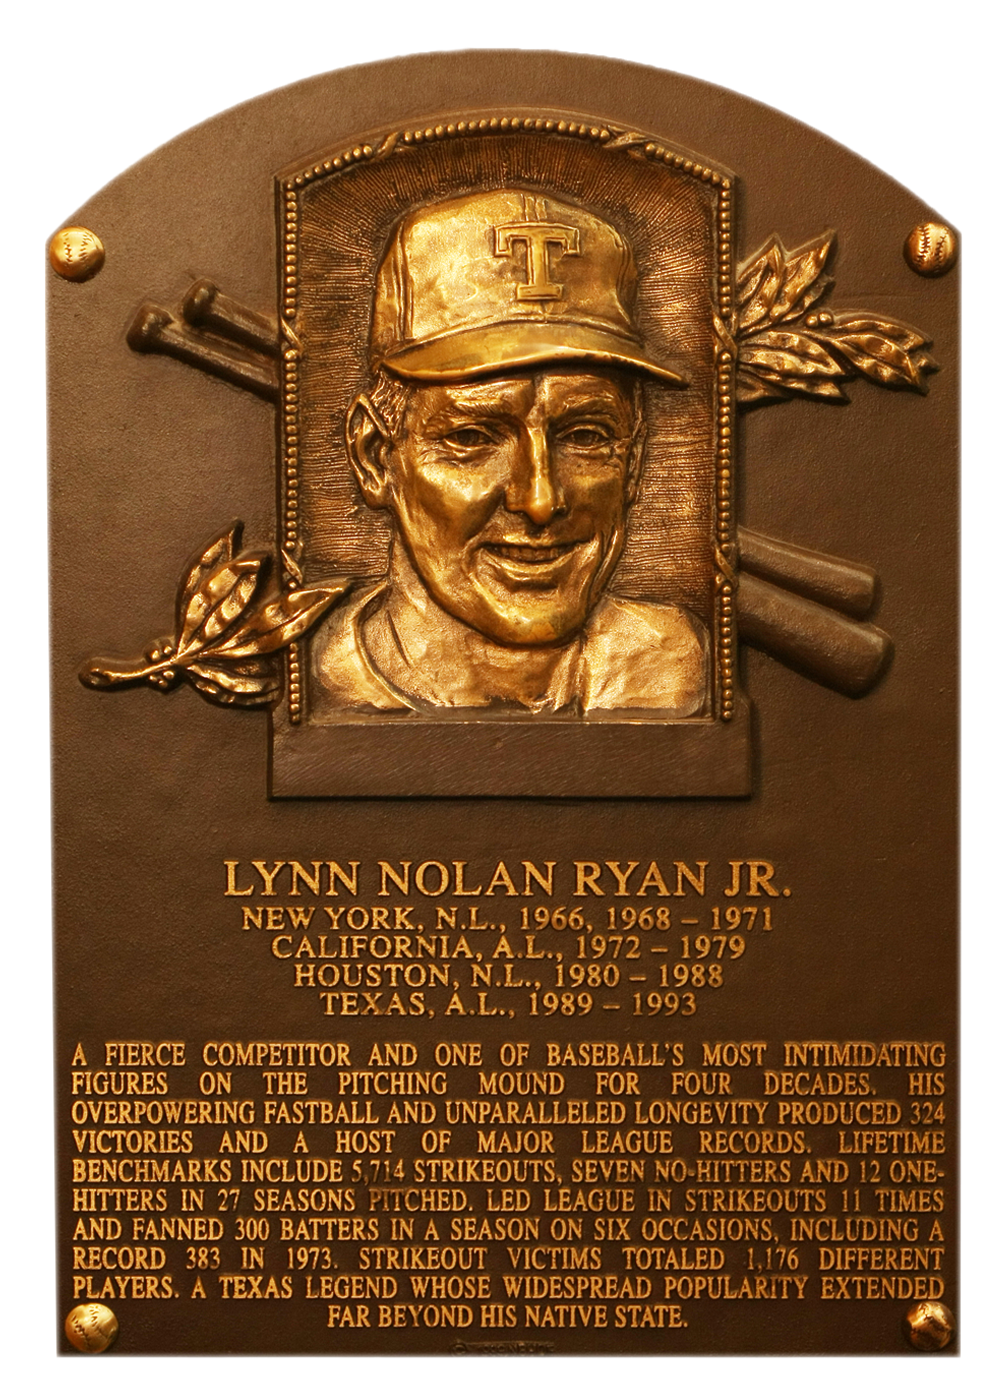 Nolan Ryan Hall of Fame plaque